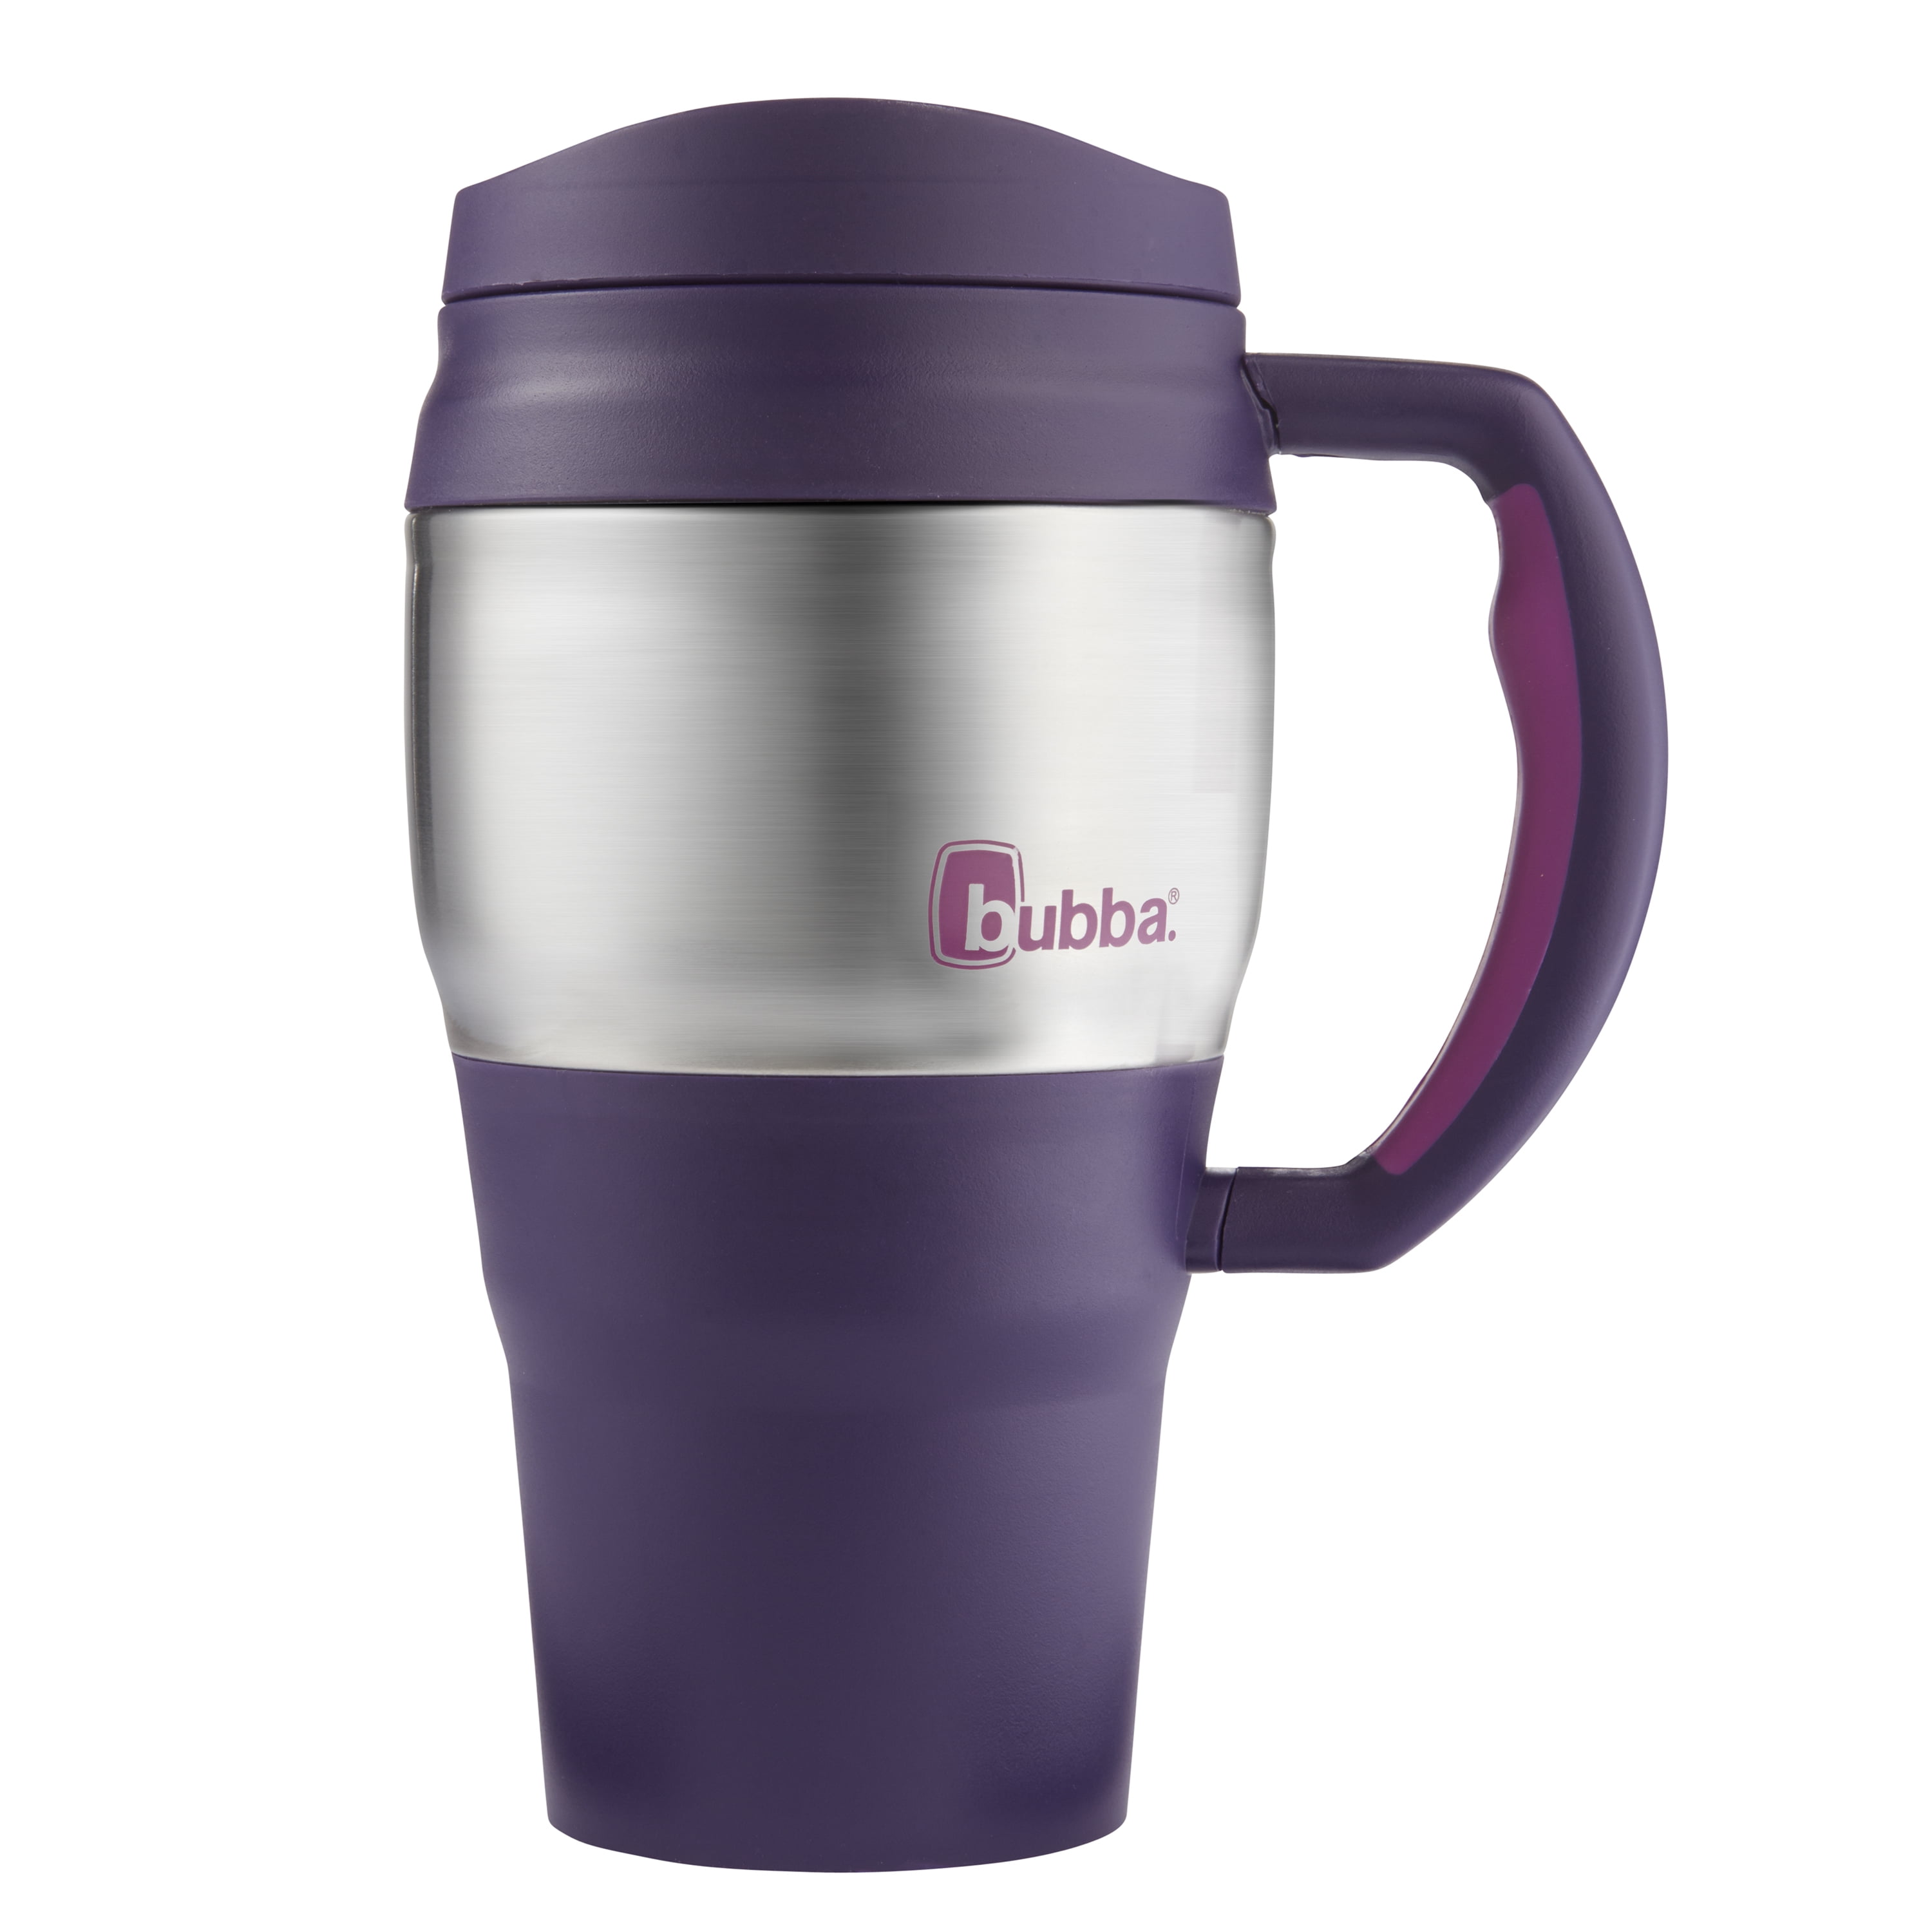 Bubba Classic Insulated Travel Mug, 20 oz, Purple - Walmart.com